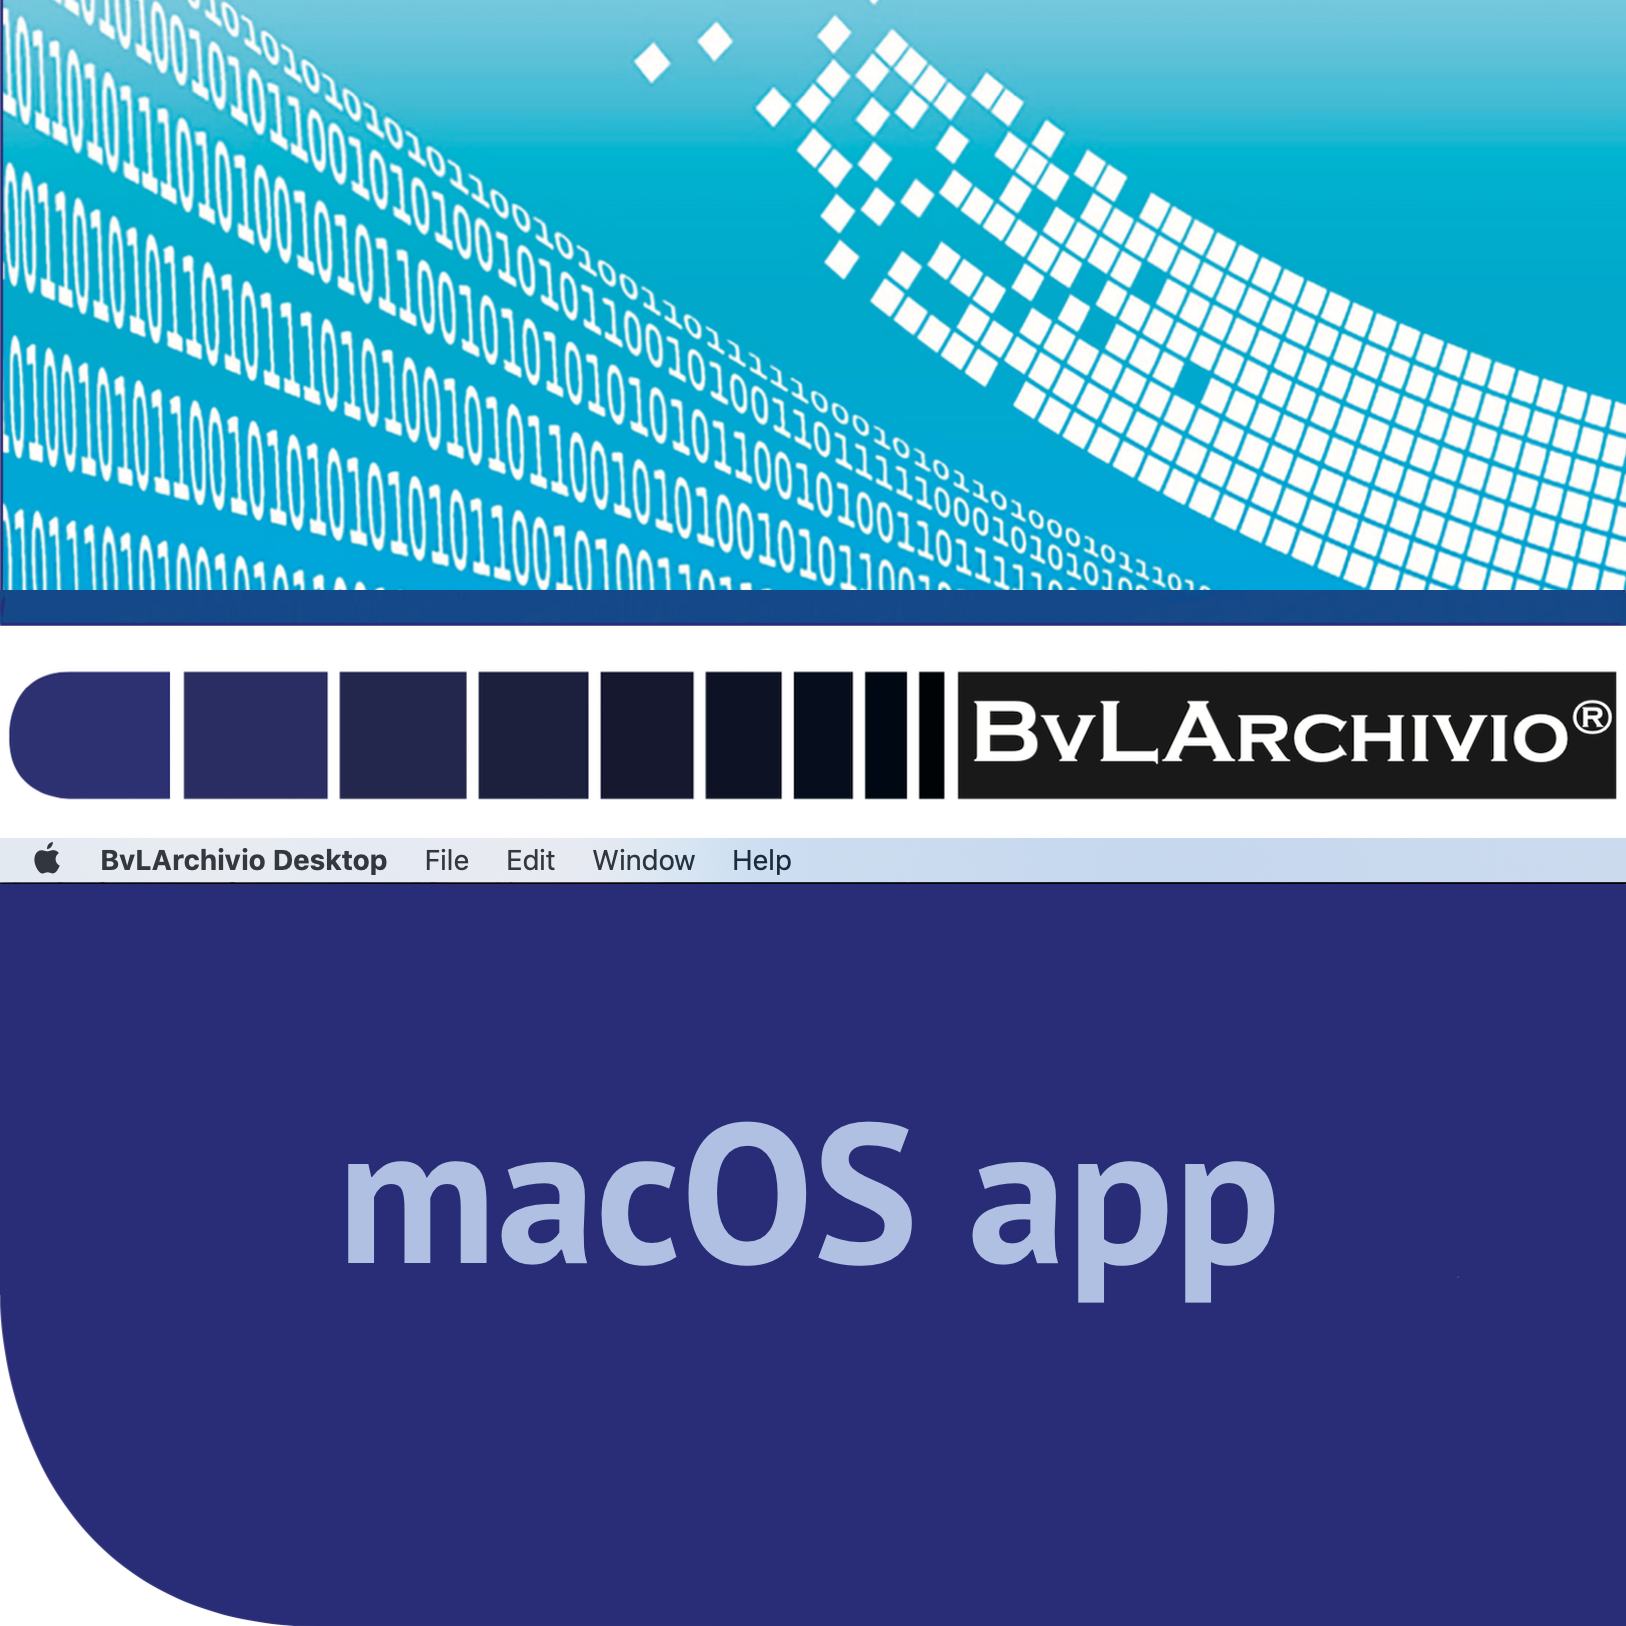 BvL Archivio Desktop